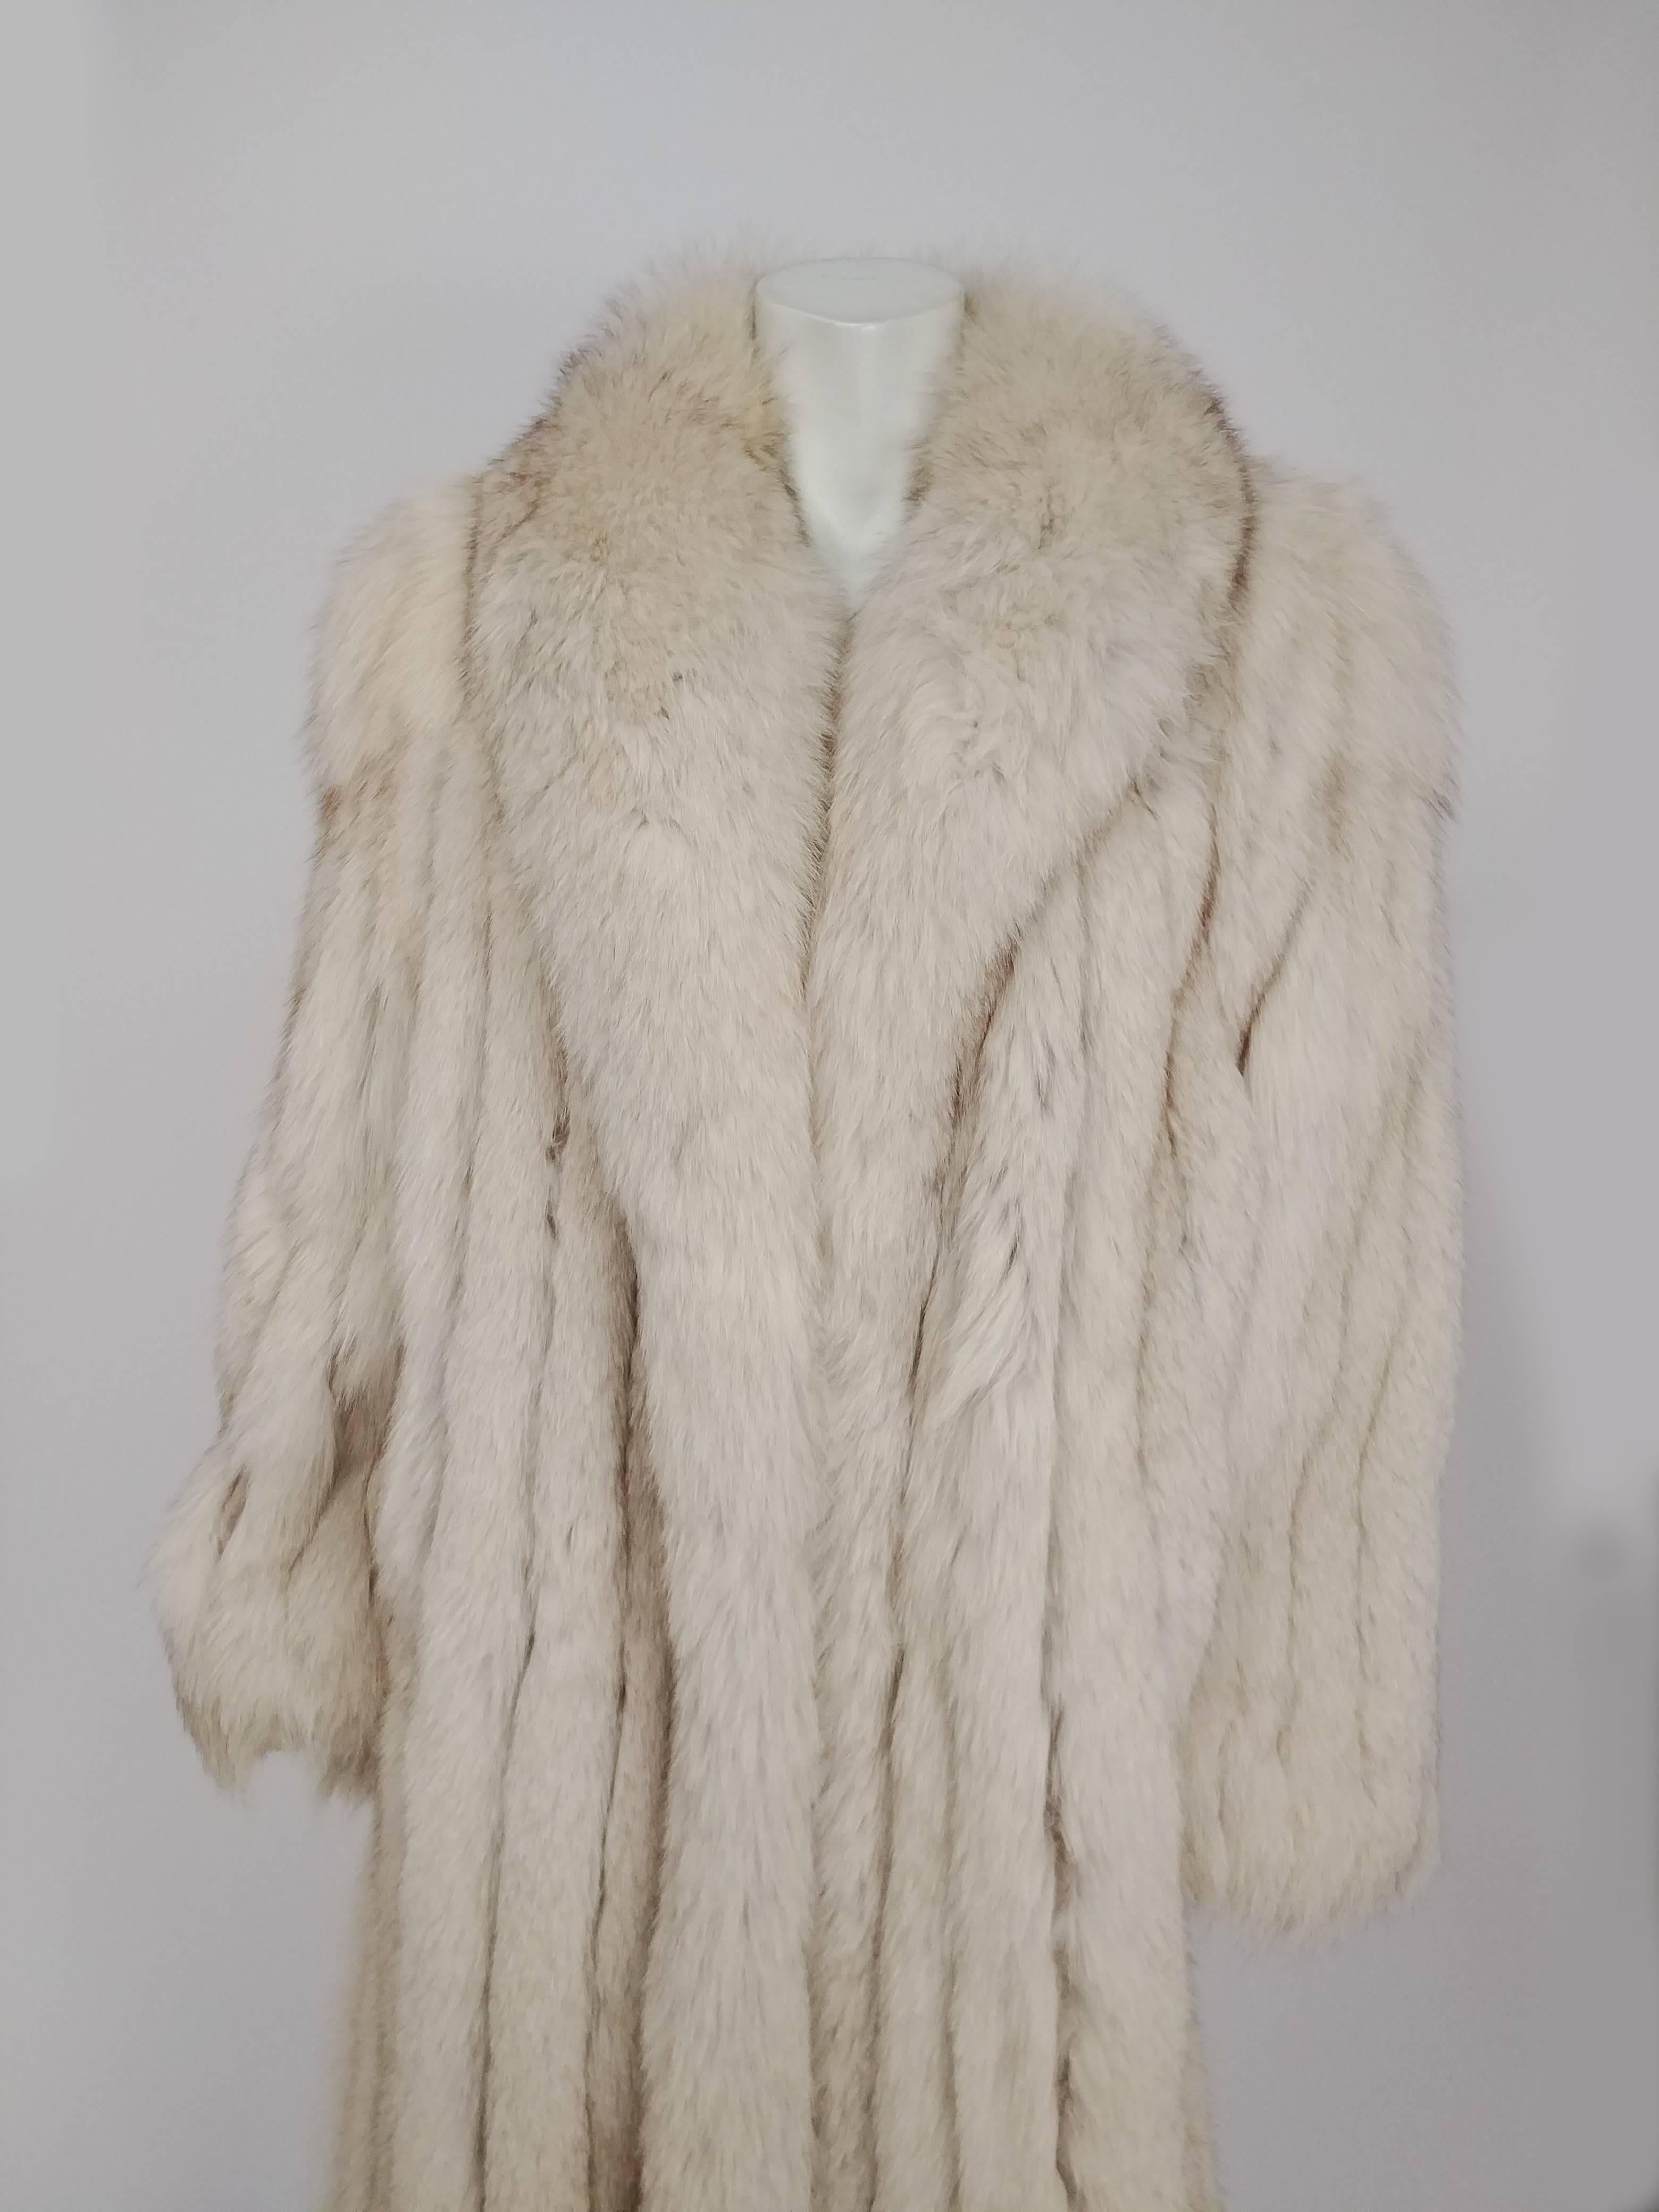 1980s Silver Fox Fur Coat. Metal fur hooks.  